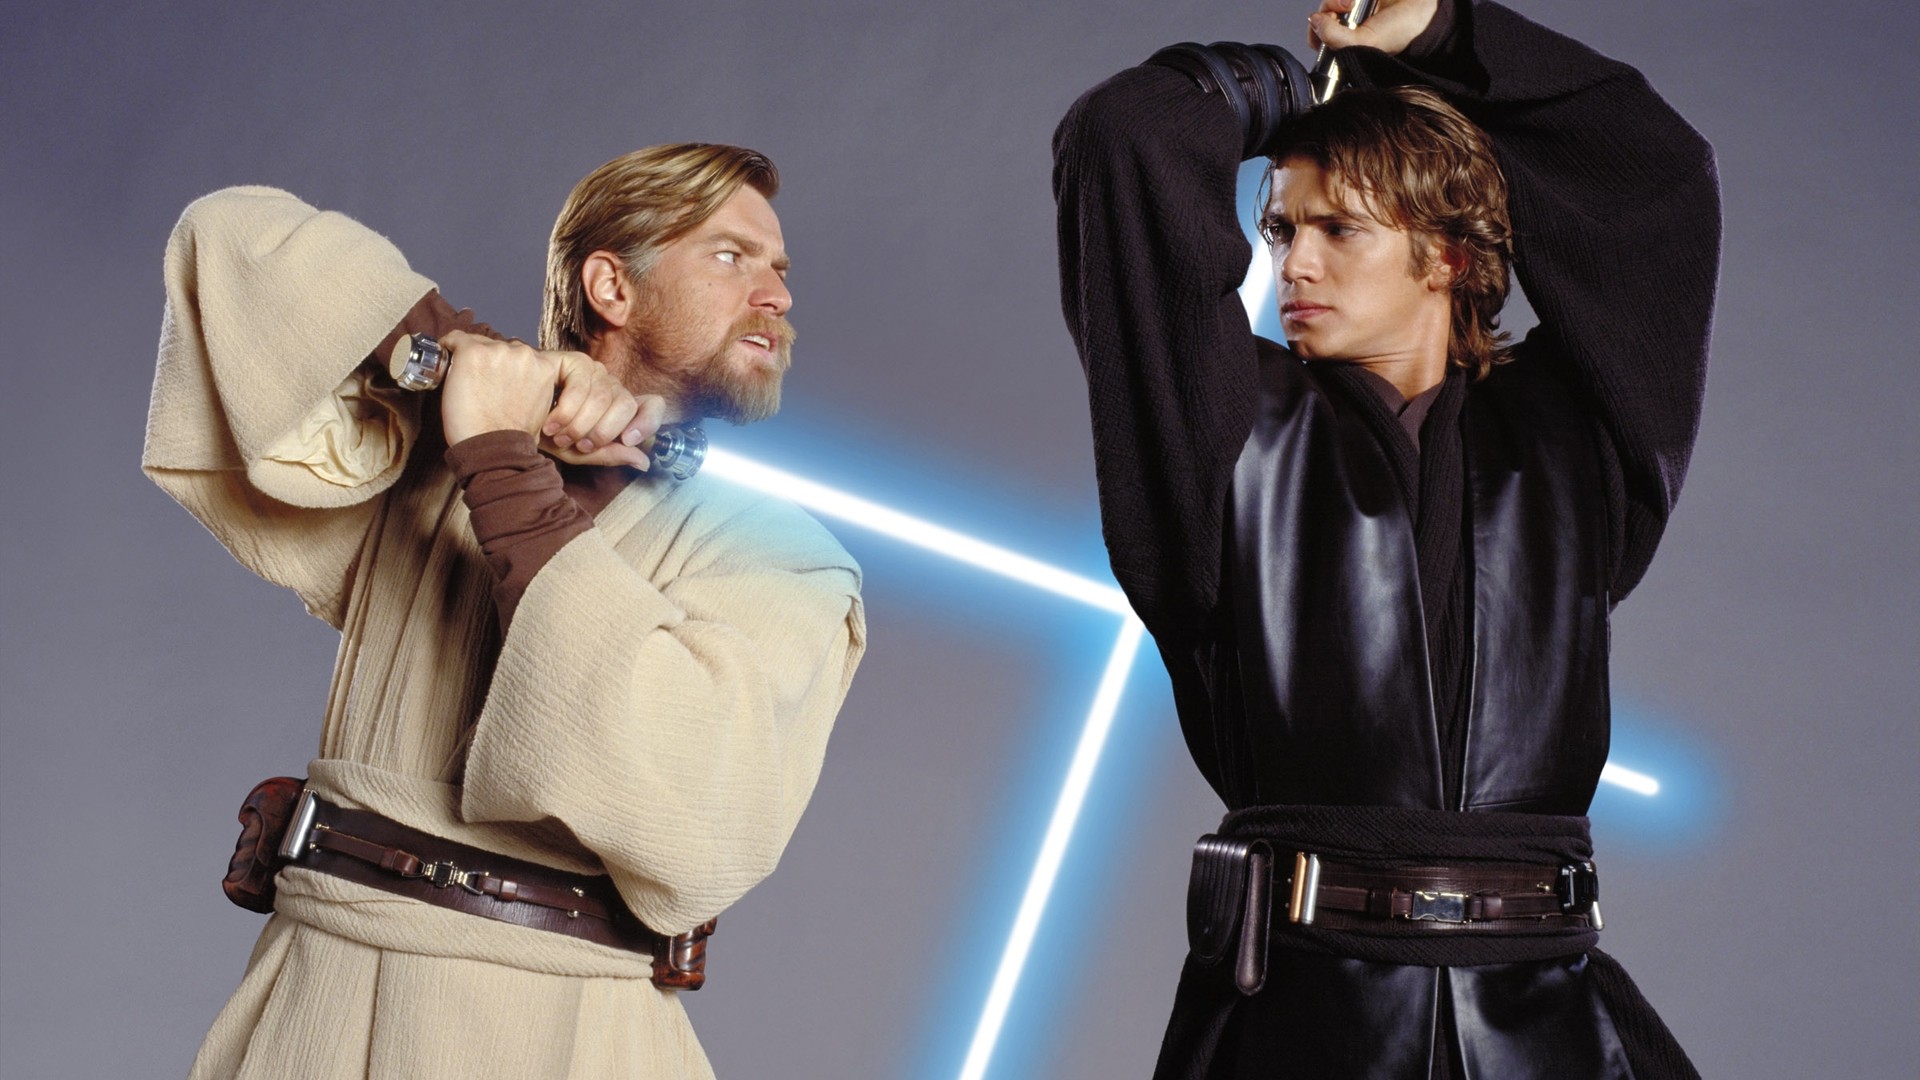 Star Wars, Ewan Mcgregor, Anakin Skywalker, Hayden Christensen, Obi-Wan Kenobi - desktop wallpaper